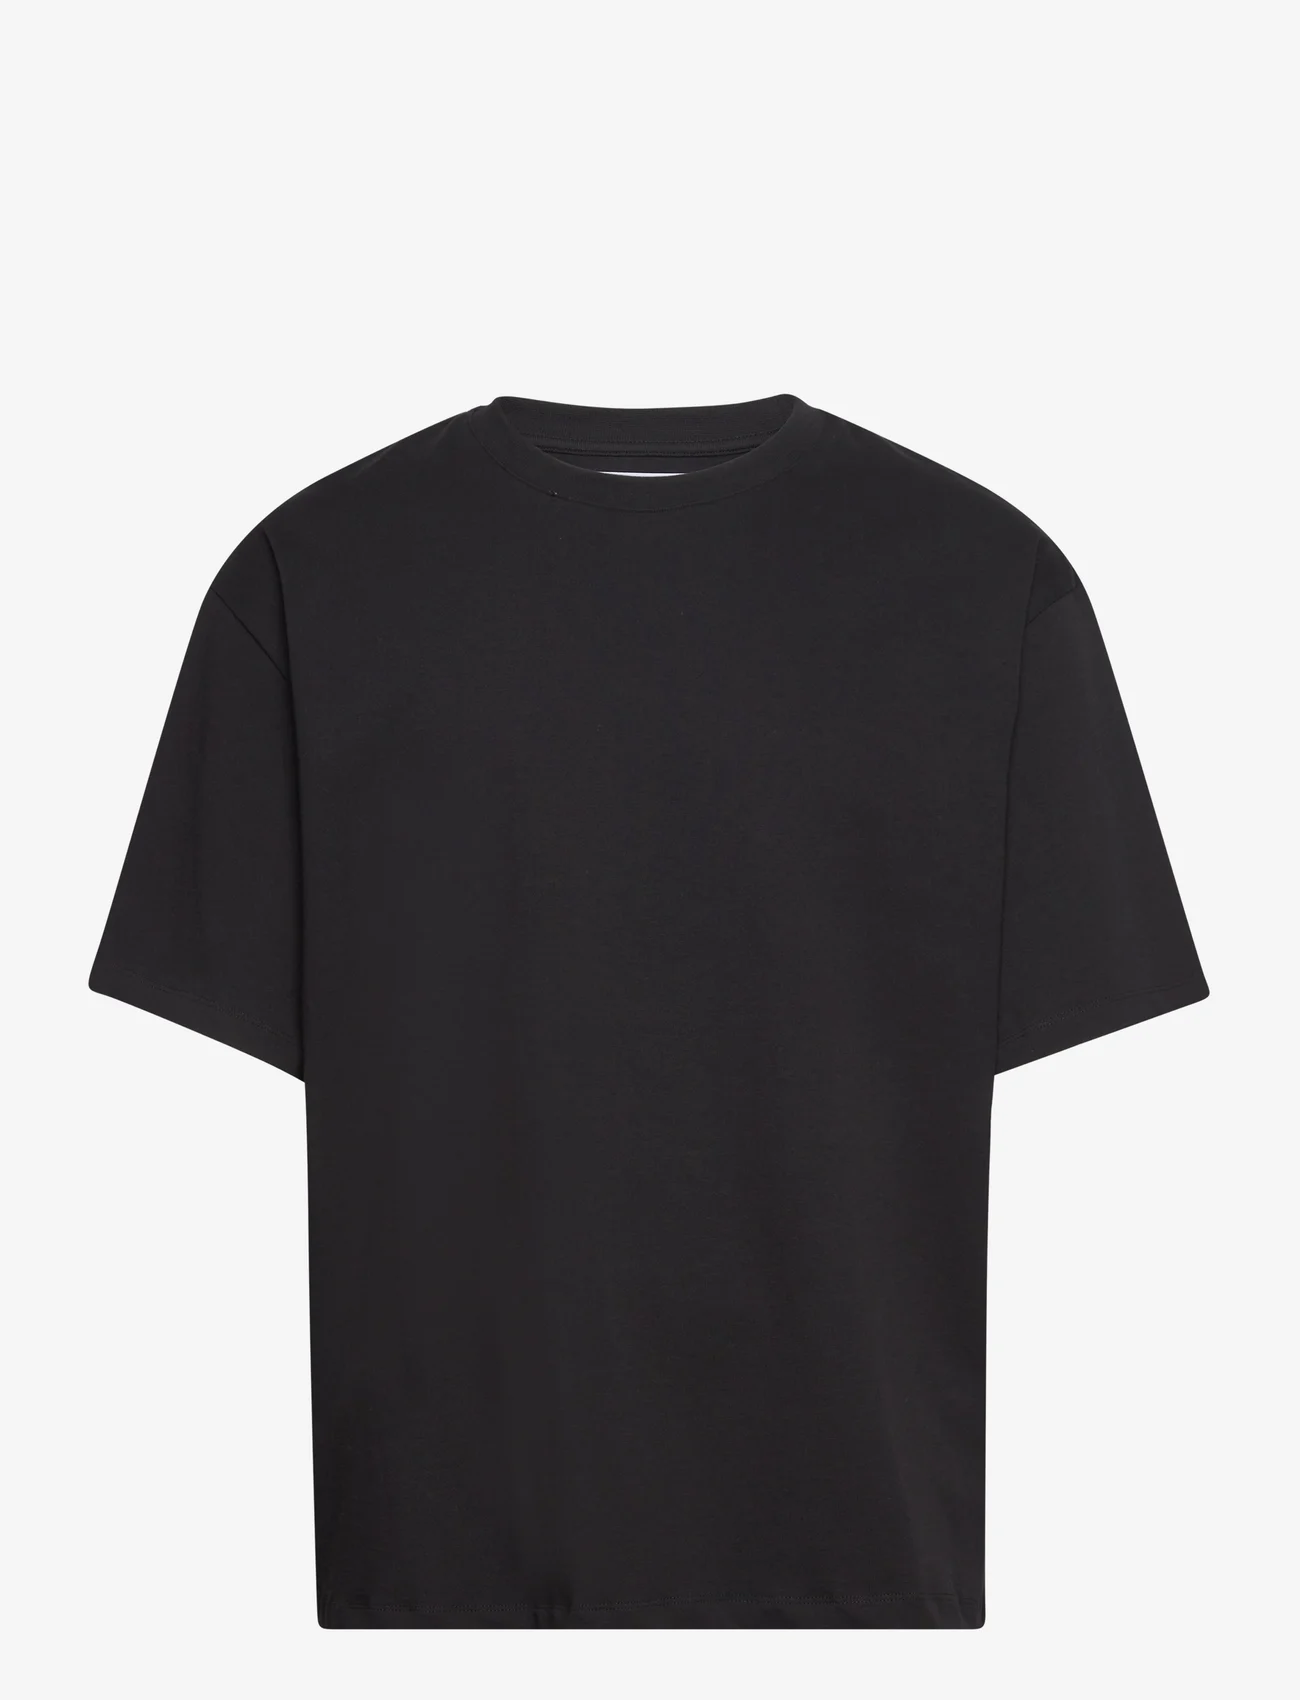 Garment Project - GP Heavy Tee - Black - kortärmade t-shirts - black - 0